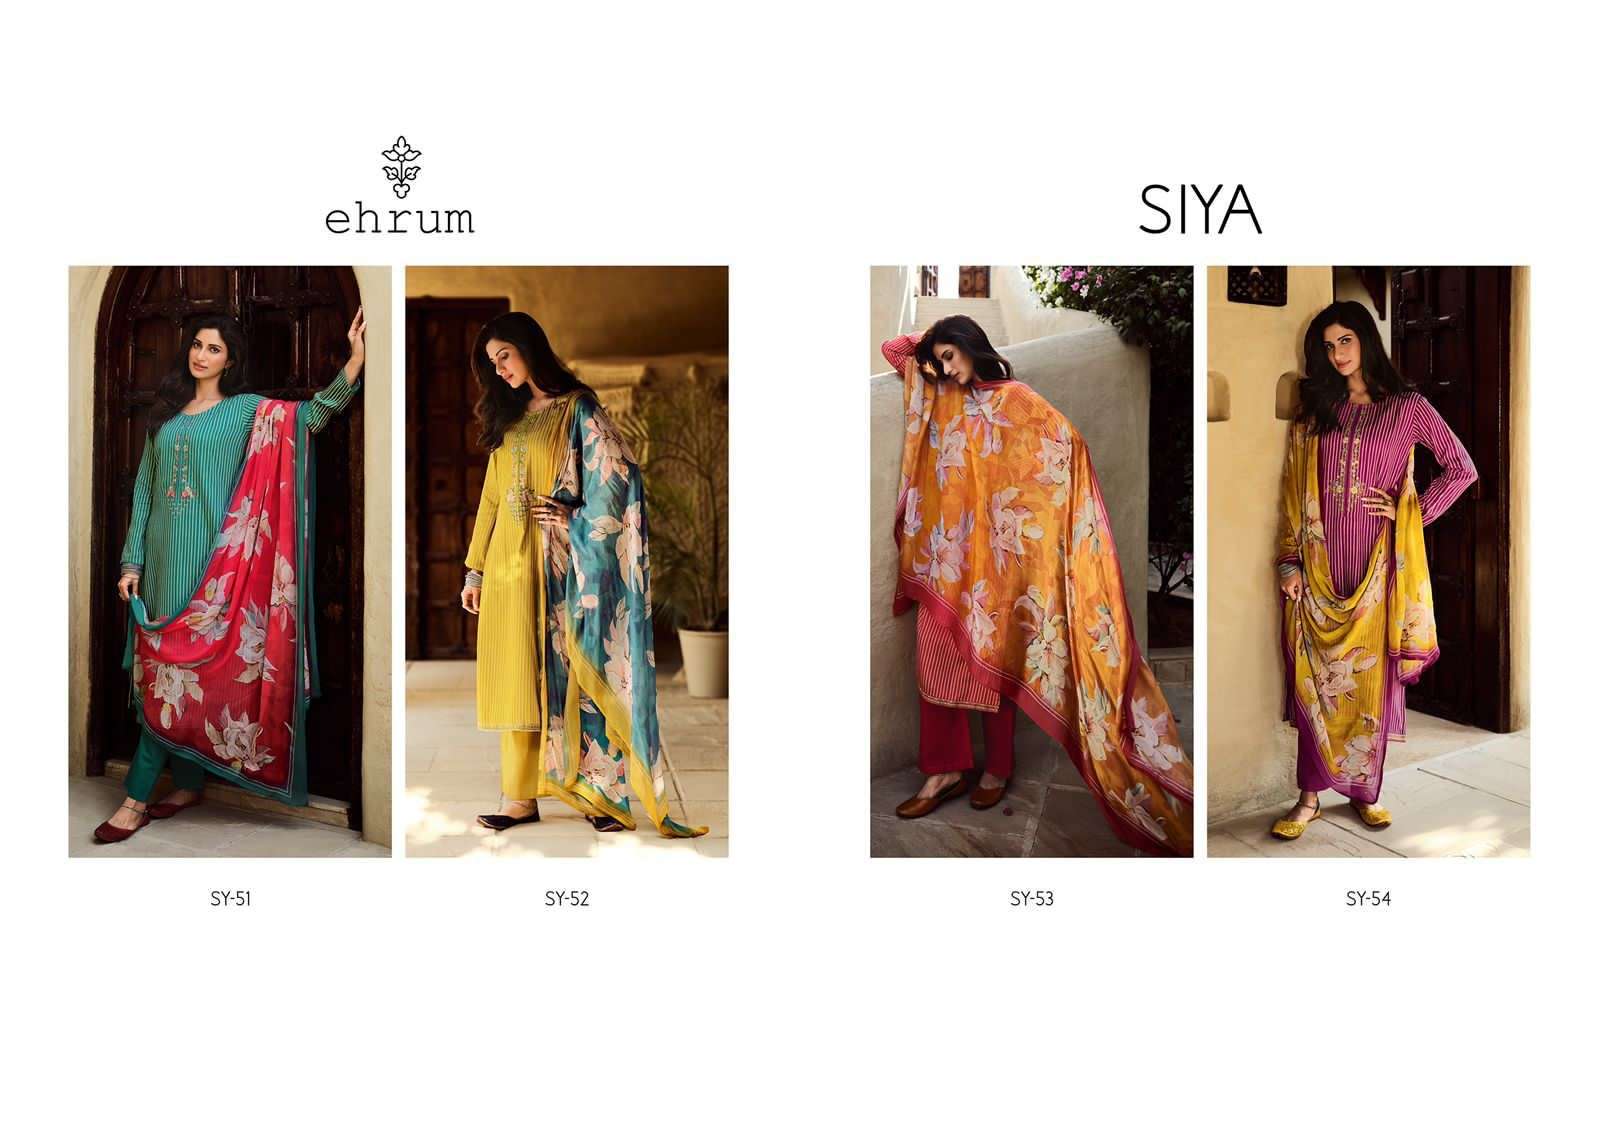 varsha fashion siya 51-54 series punjabi salwar kameez pratham exports surat